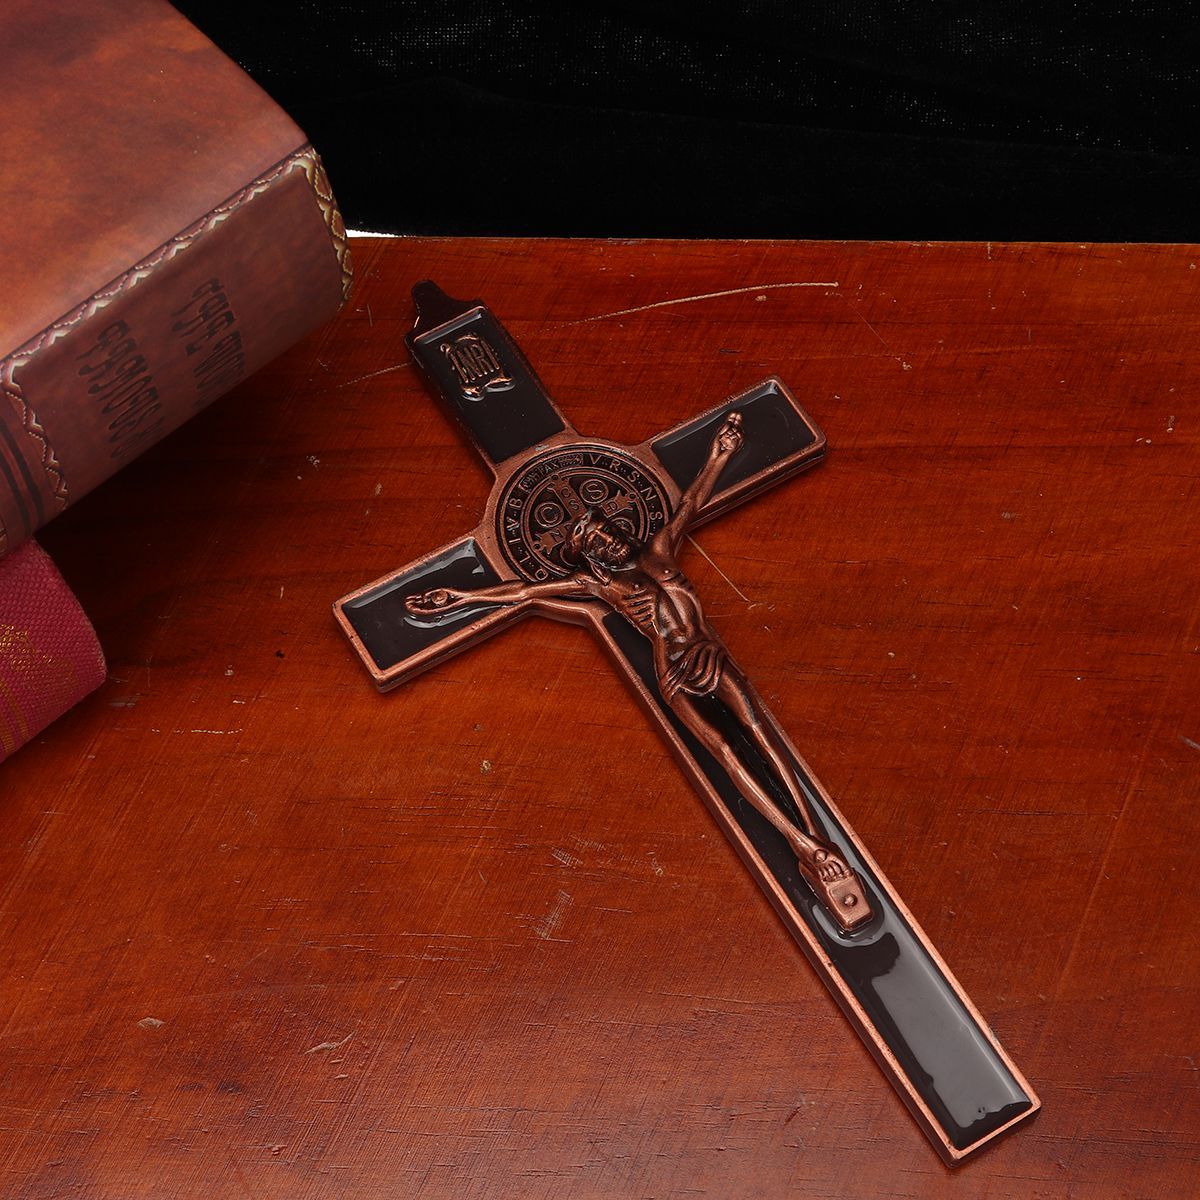 Crucifix-Cross-Jesus-INRI-Catholic-Altar-Religious-Necklace-Pendant-Christ-Decor-1697002